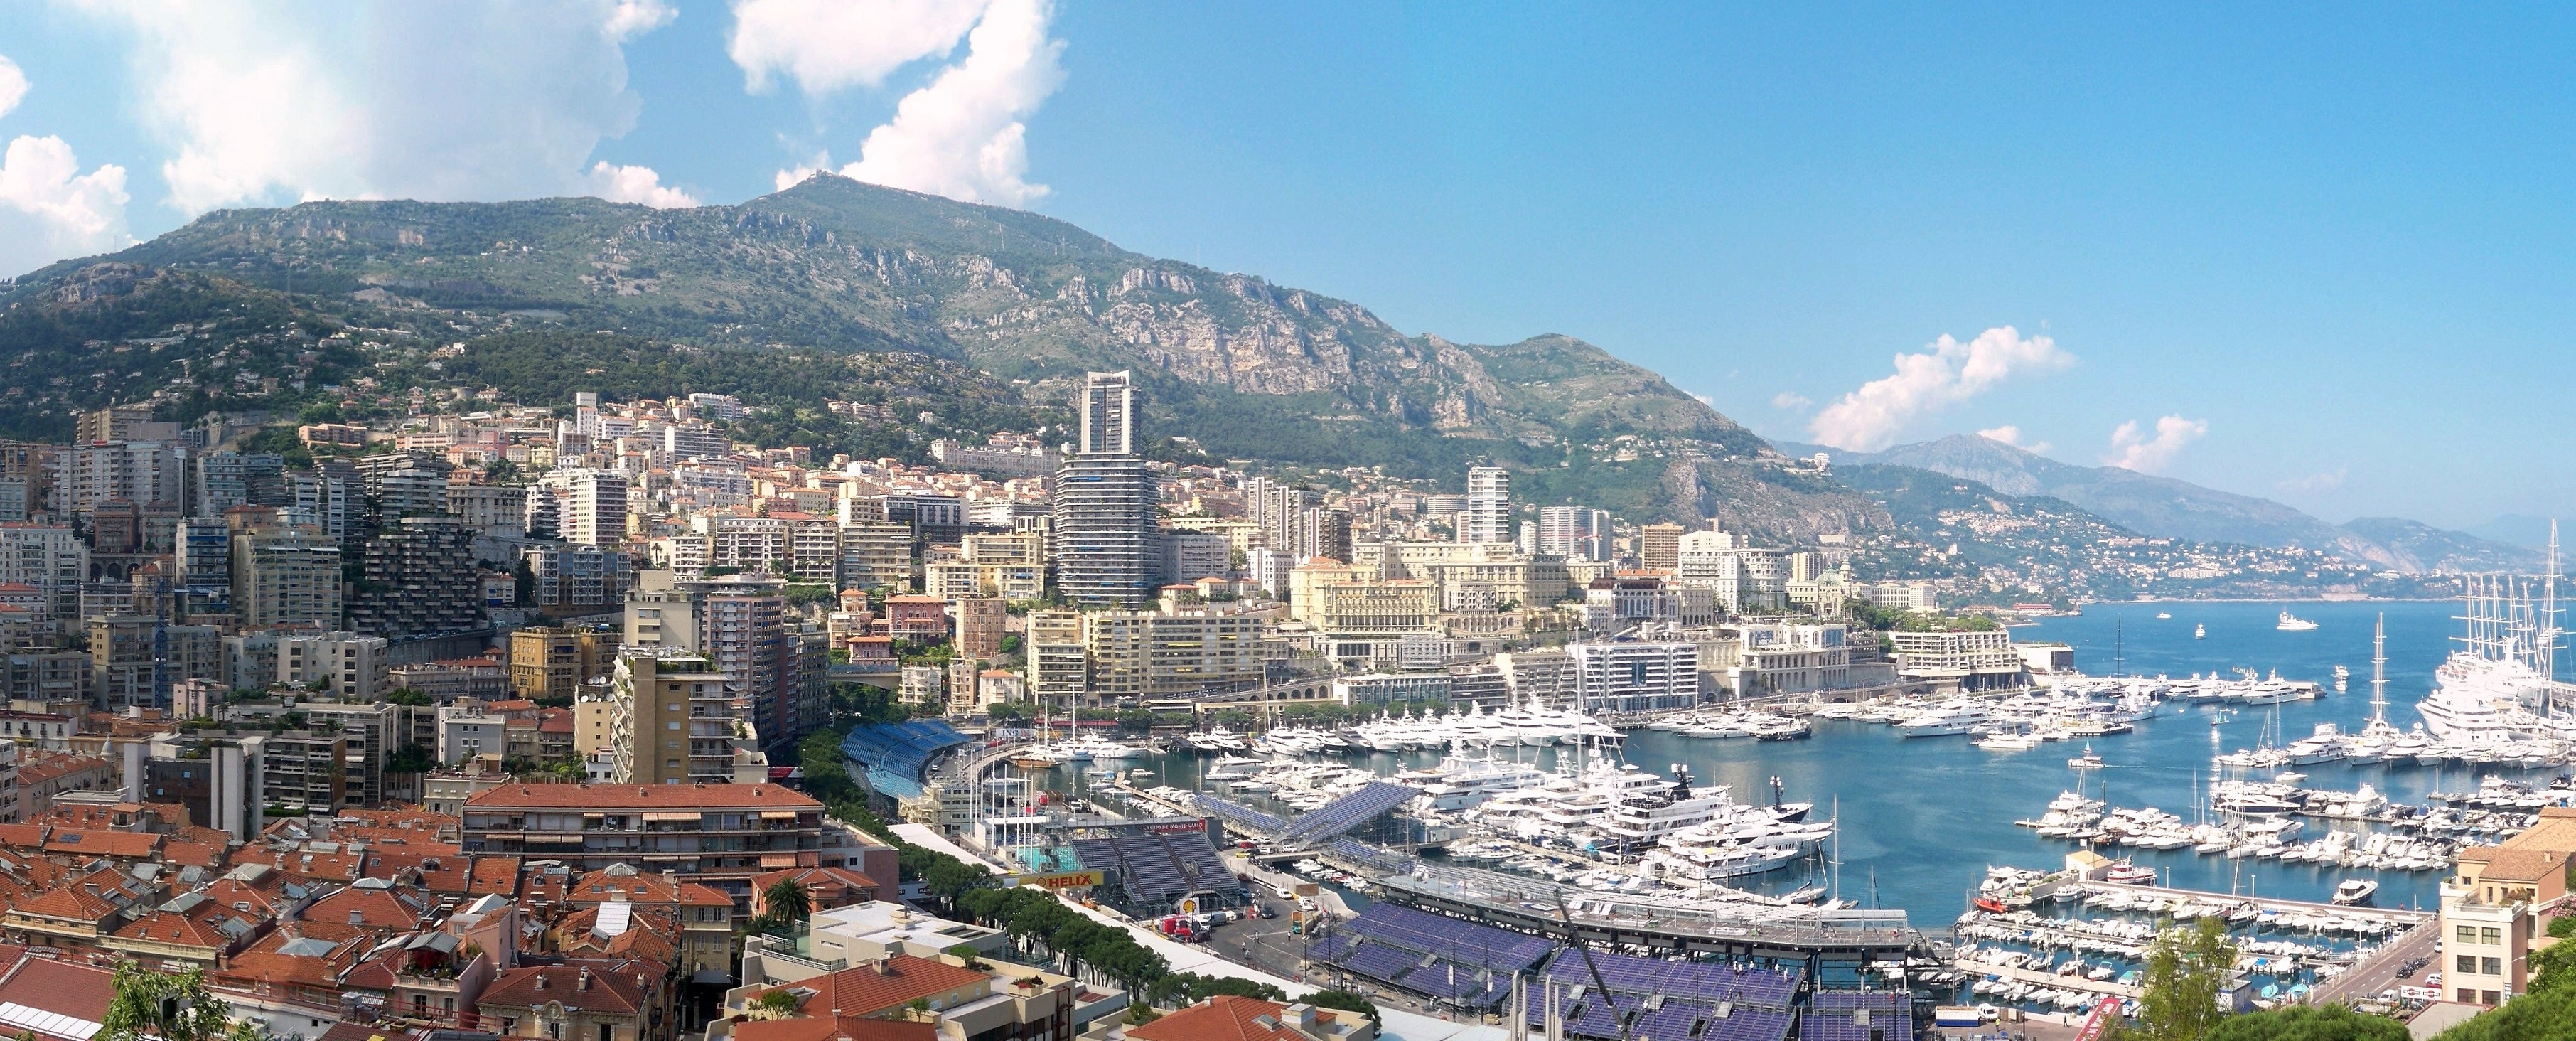 Monaco, Monte Carlo, Travel destination, Computer wallpaper, 3630x1470 Dual Screen Desktop